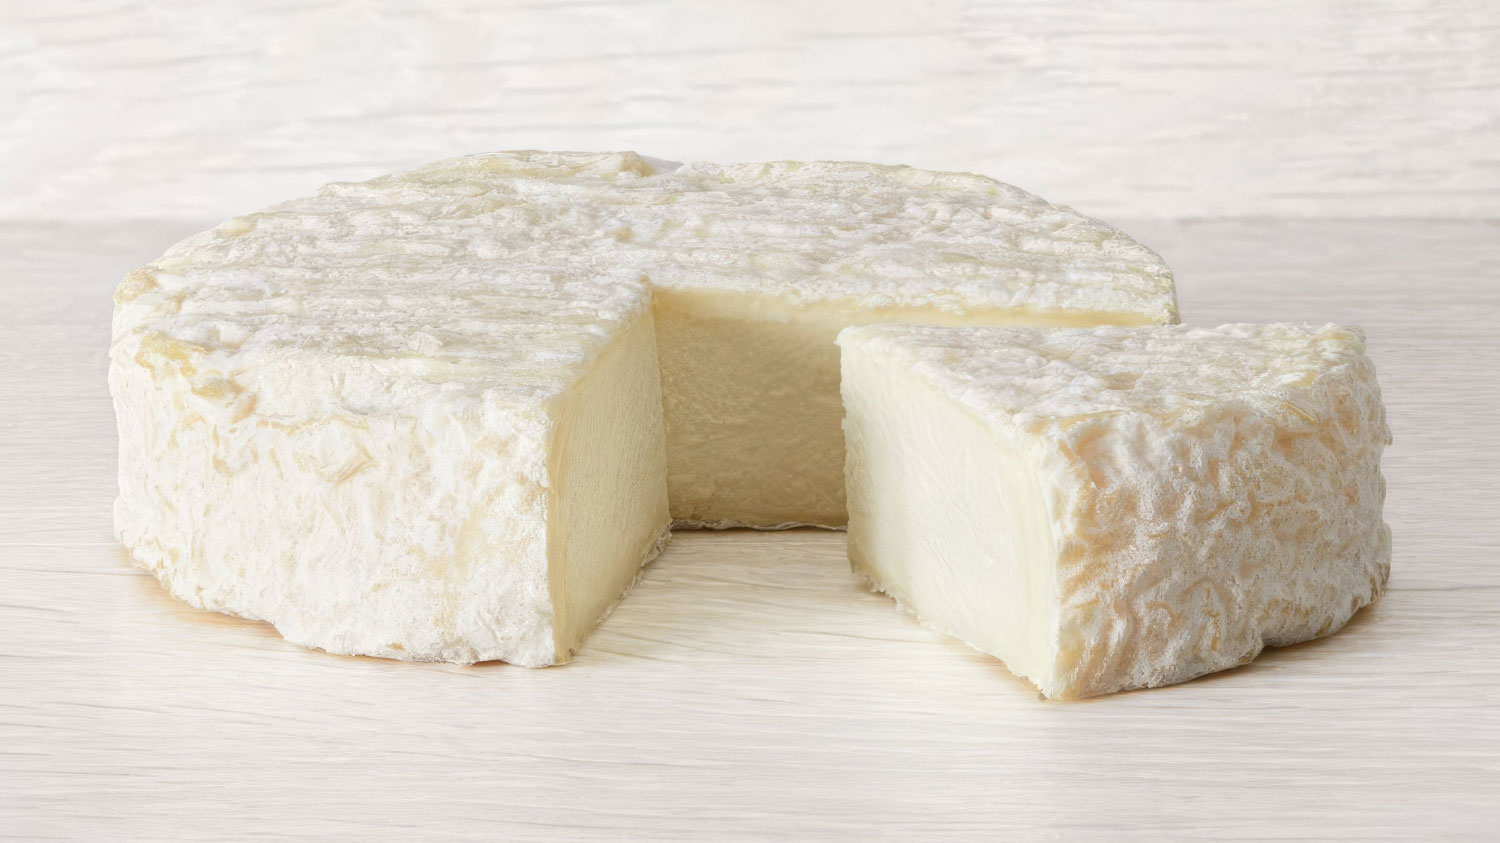 Cheeses_in_Season_Perail_Sheep_Cheese_from_France_Seasonal_French_Cheese_in_Dubai_Abu_Dhabi_WISK_UAE.jpg